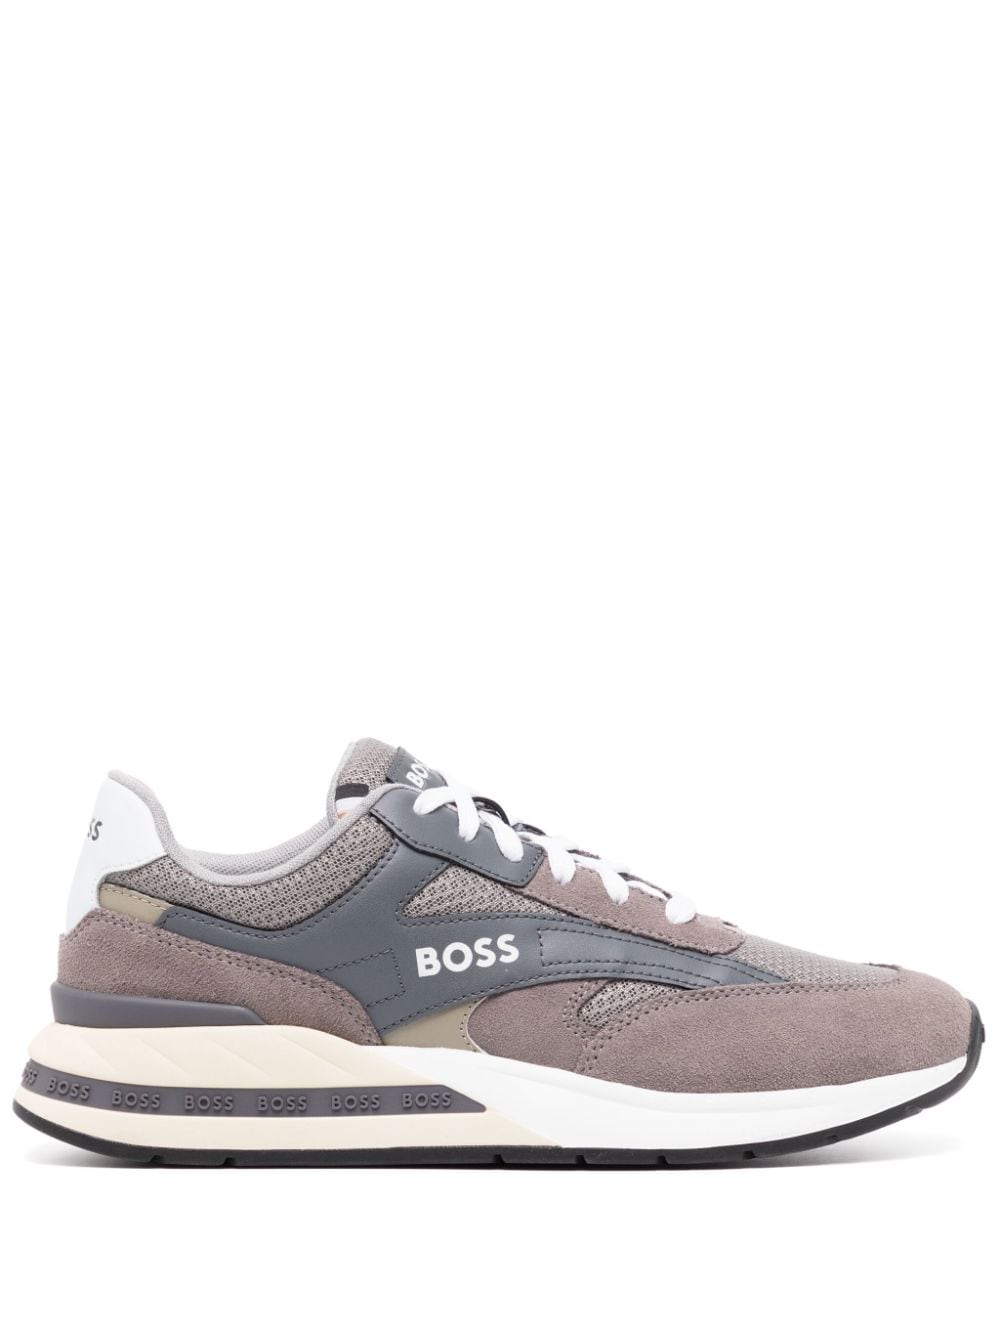 Hugo Boss Kurt 01 Lace-up Sneakers In Grey